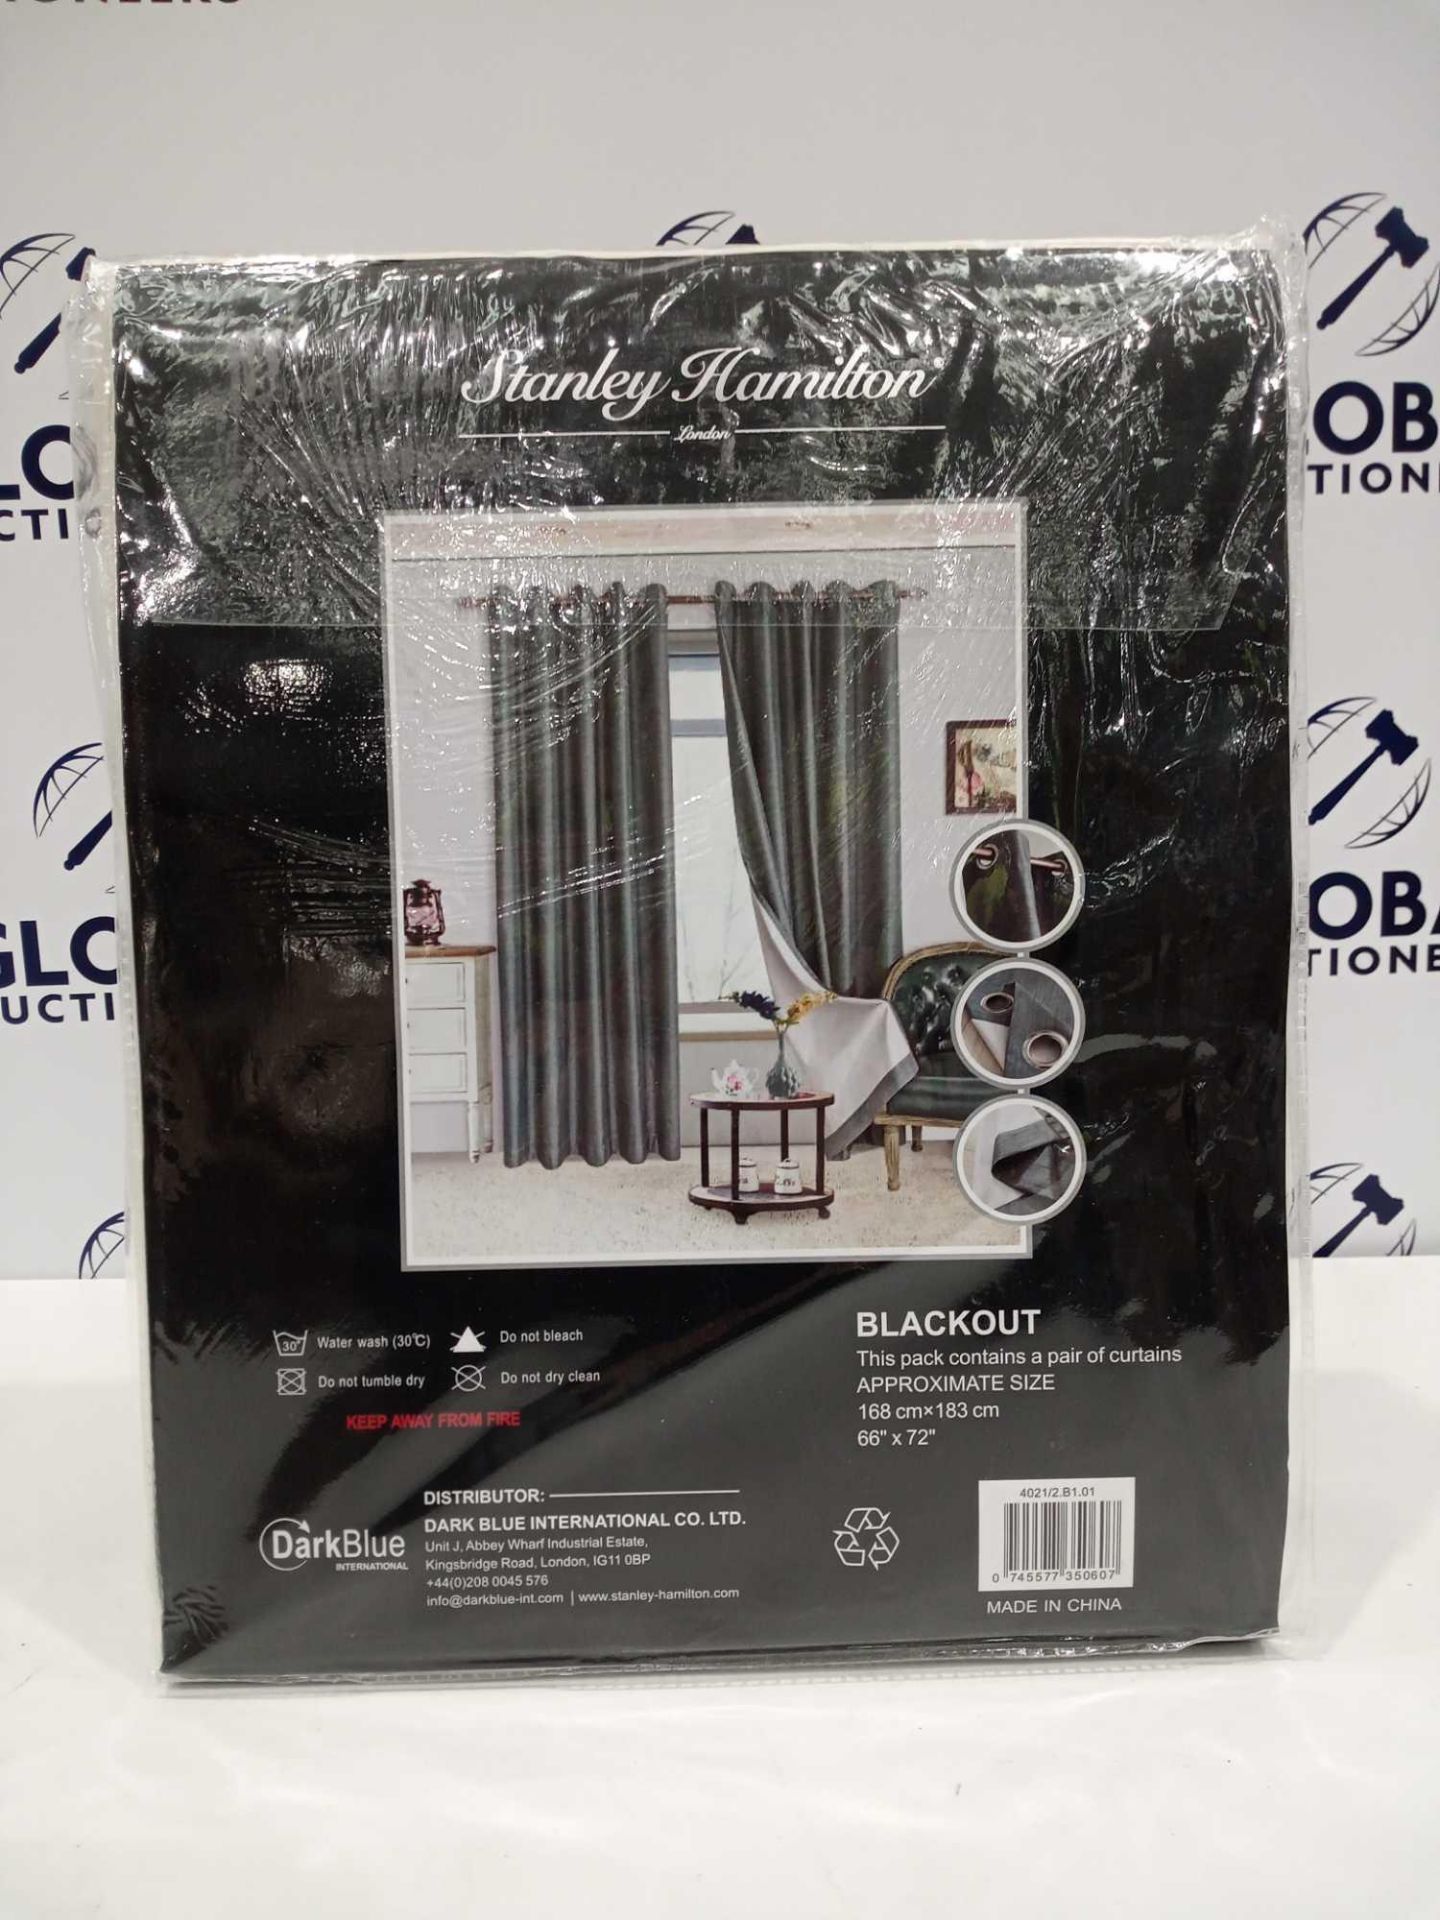 RRP £90 Bagged Stanley Hamilton Blackout 168Cm X 183Cm Curtains - Image 2 of 2